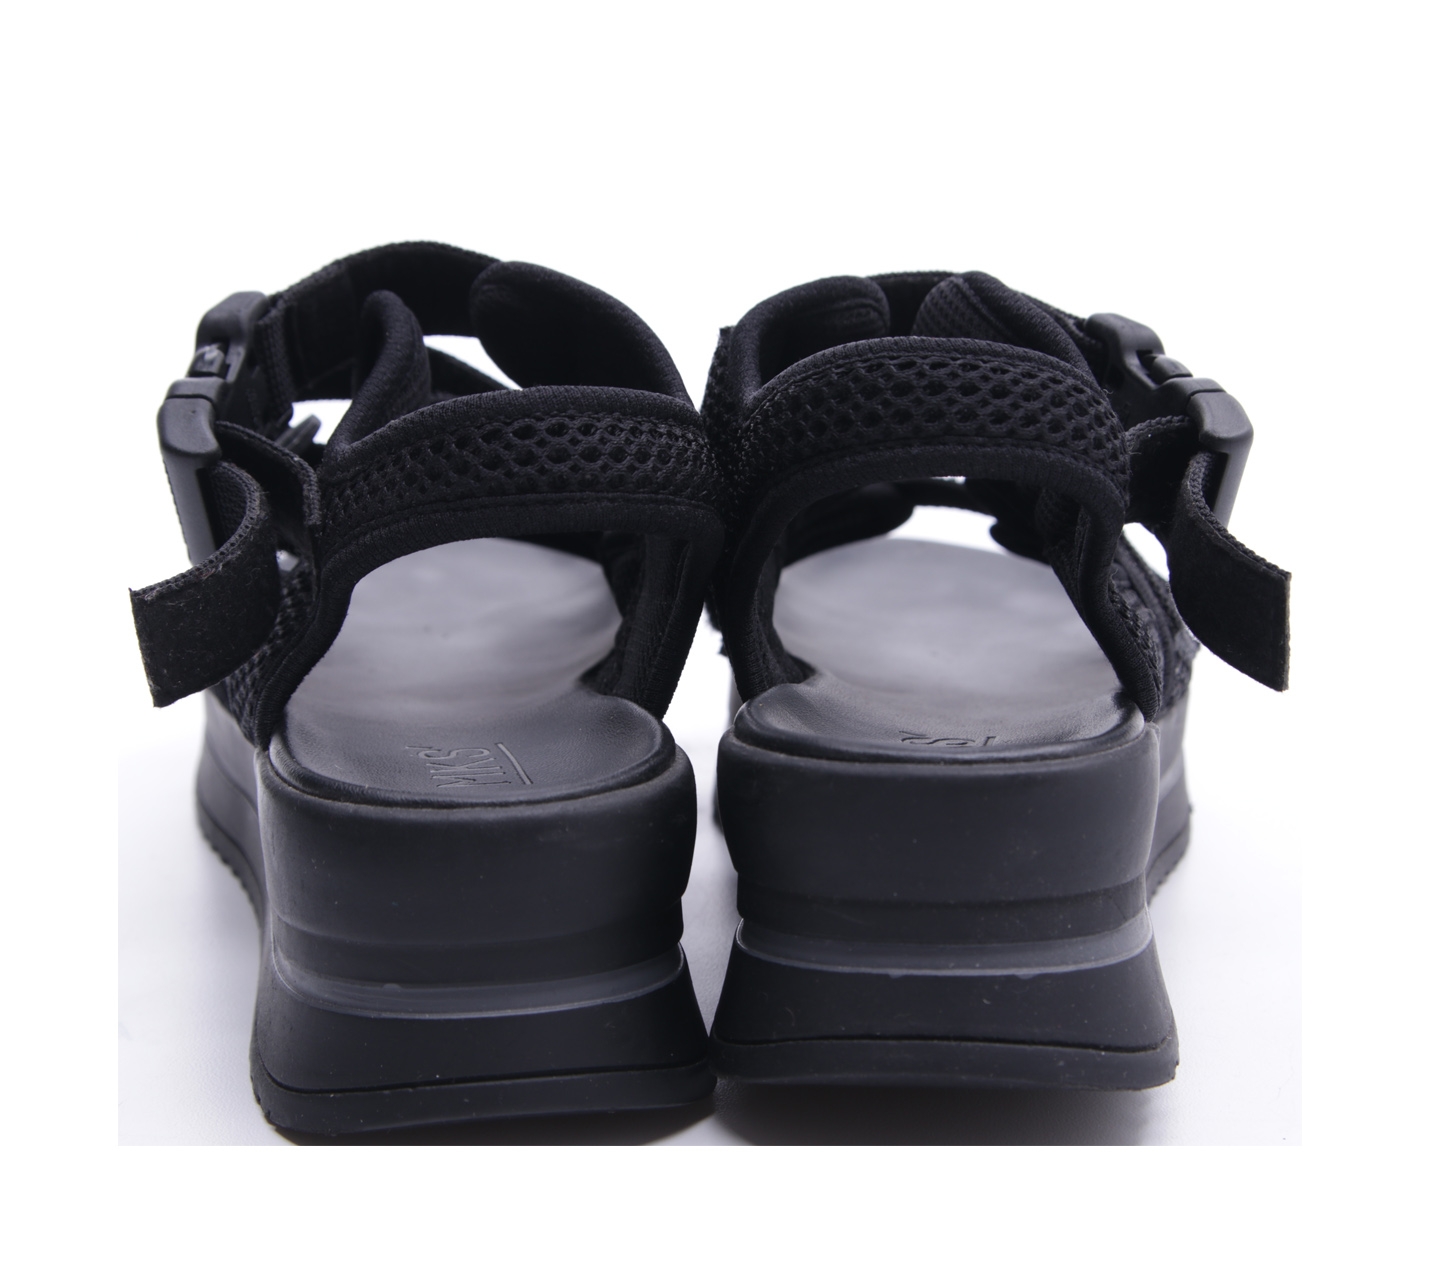 MKS Black Sandals